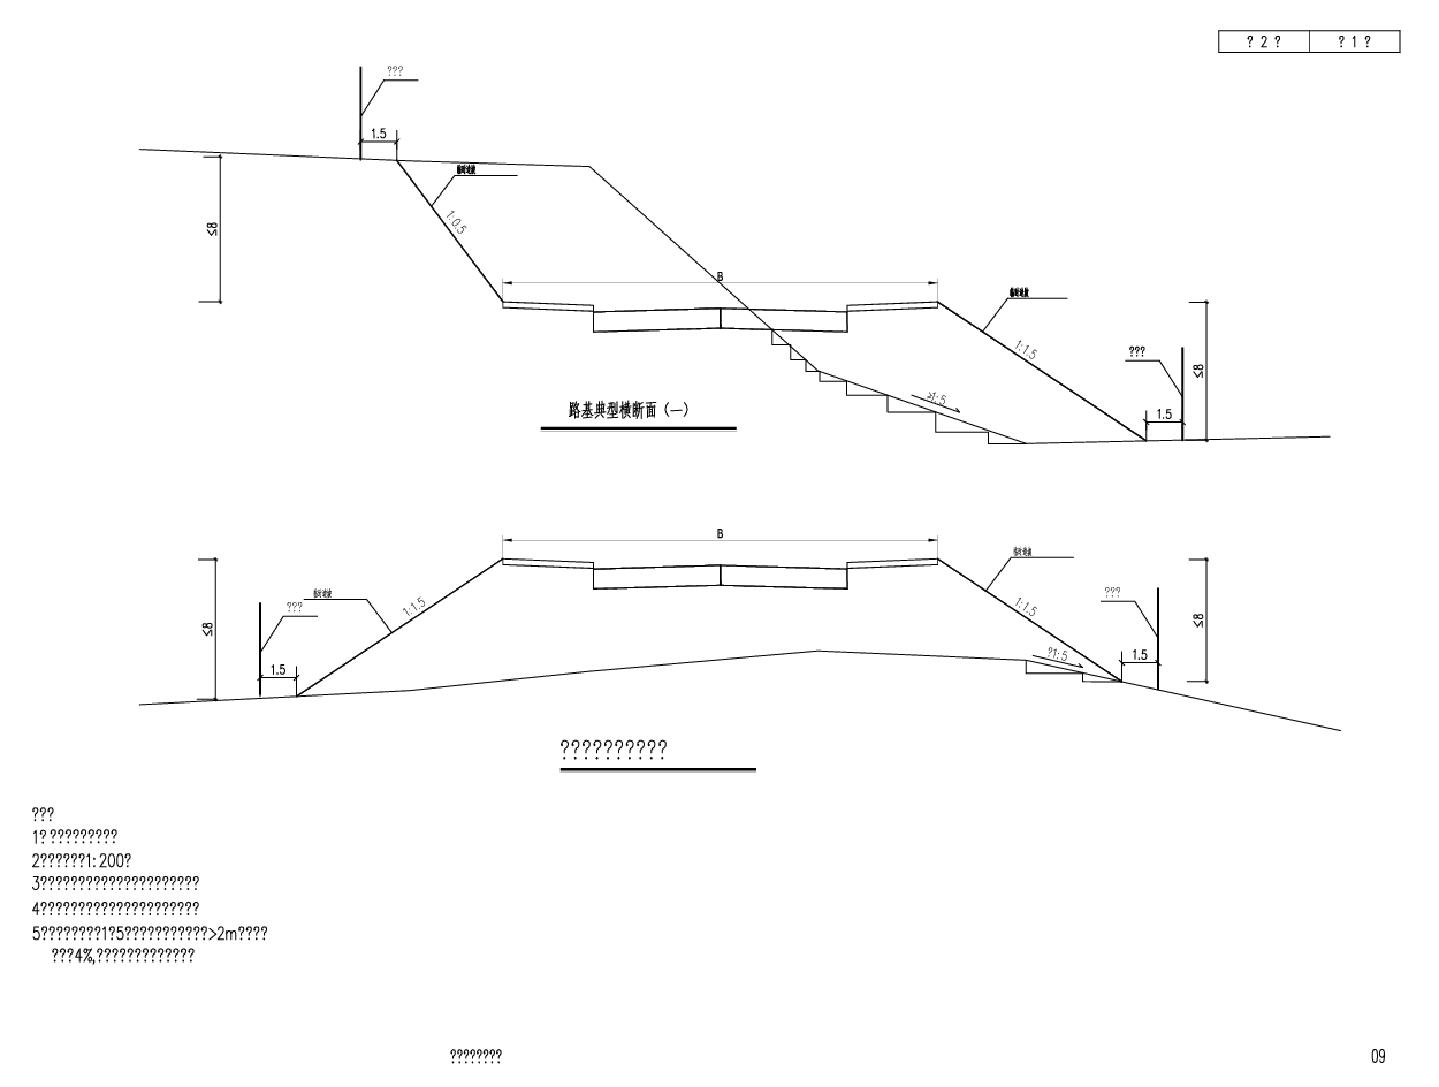 LS-09路基典型横断面图CAD图.dwg